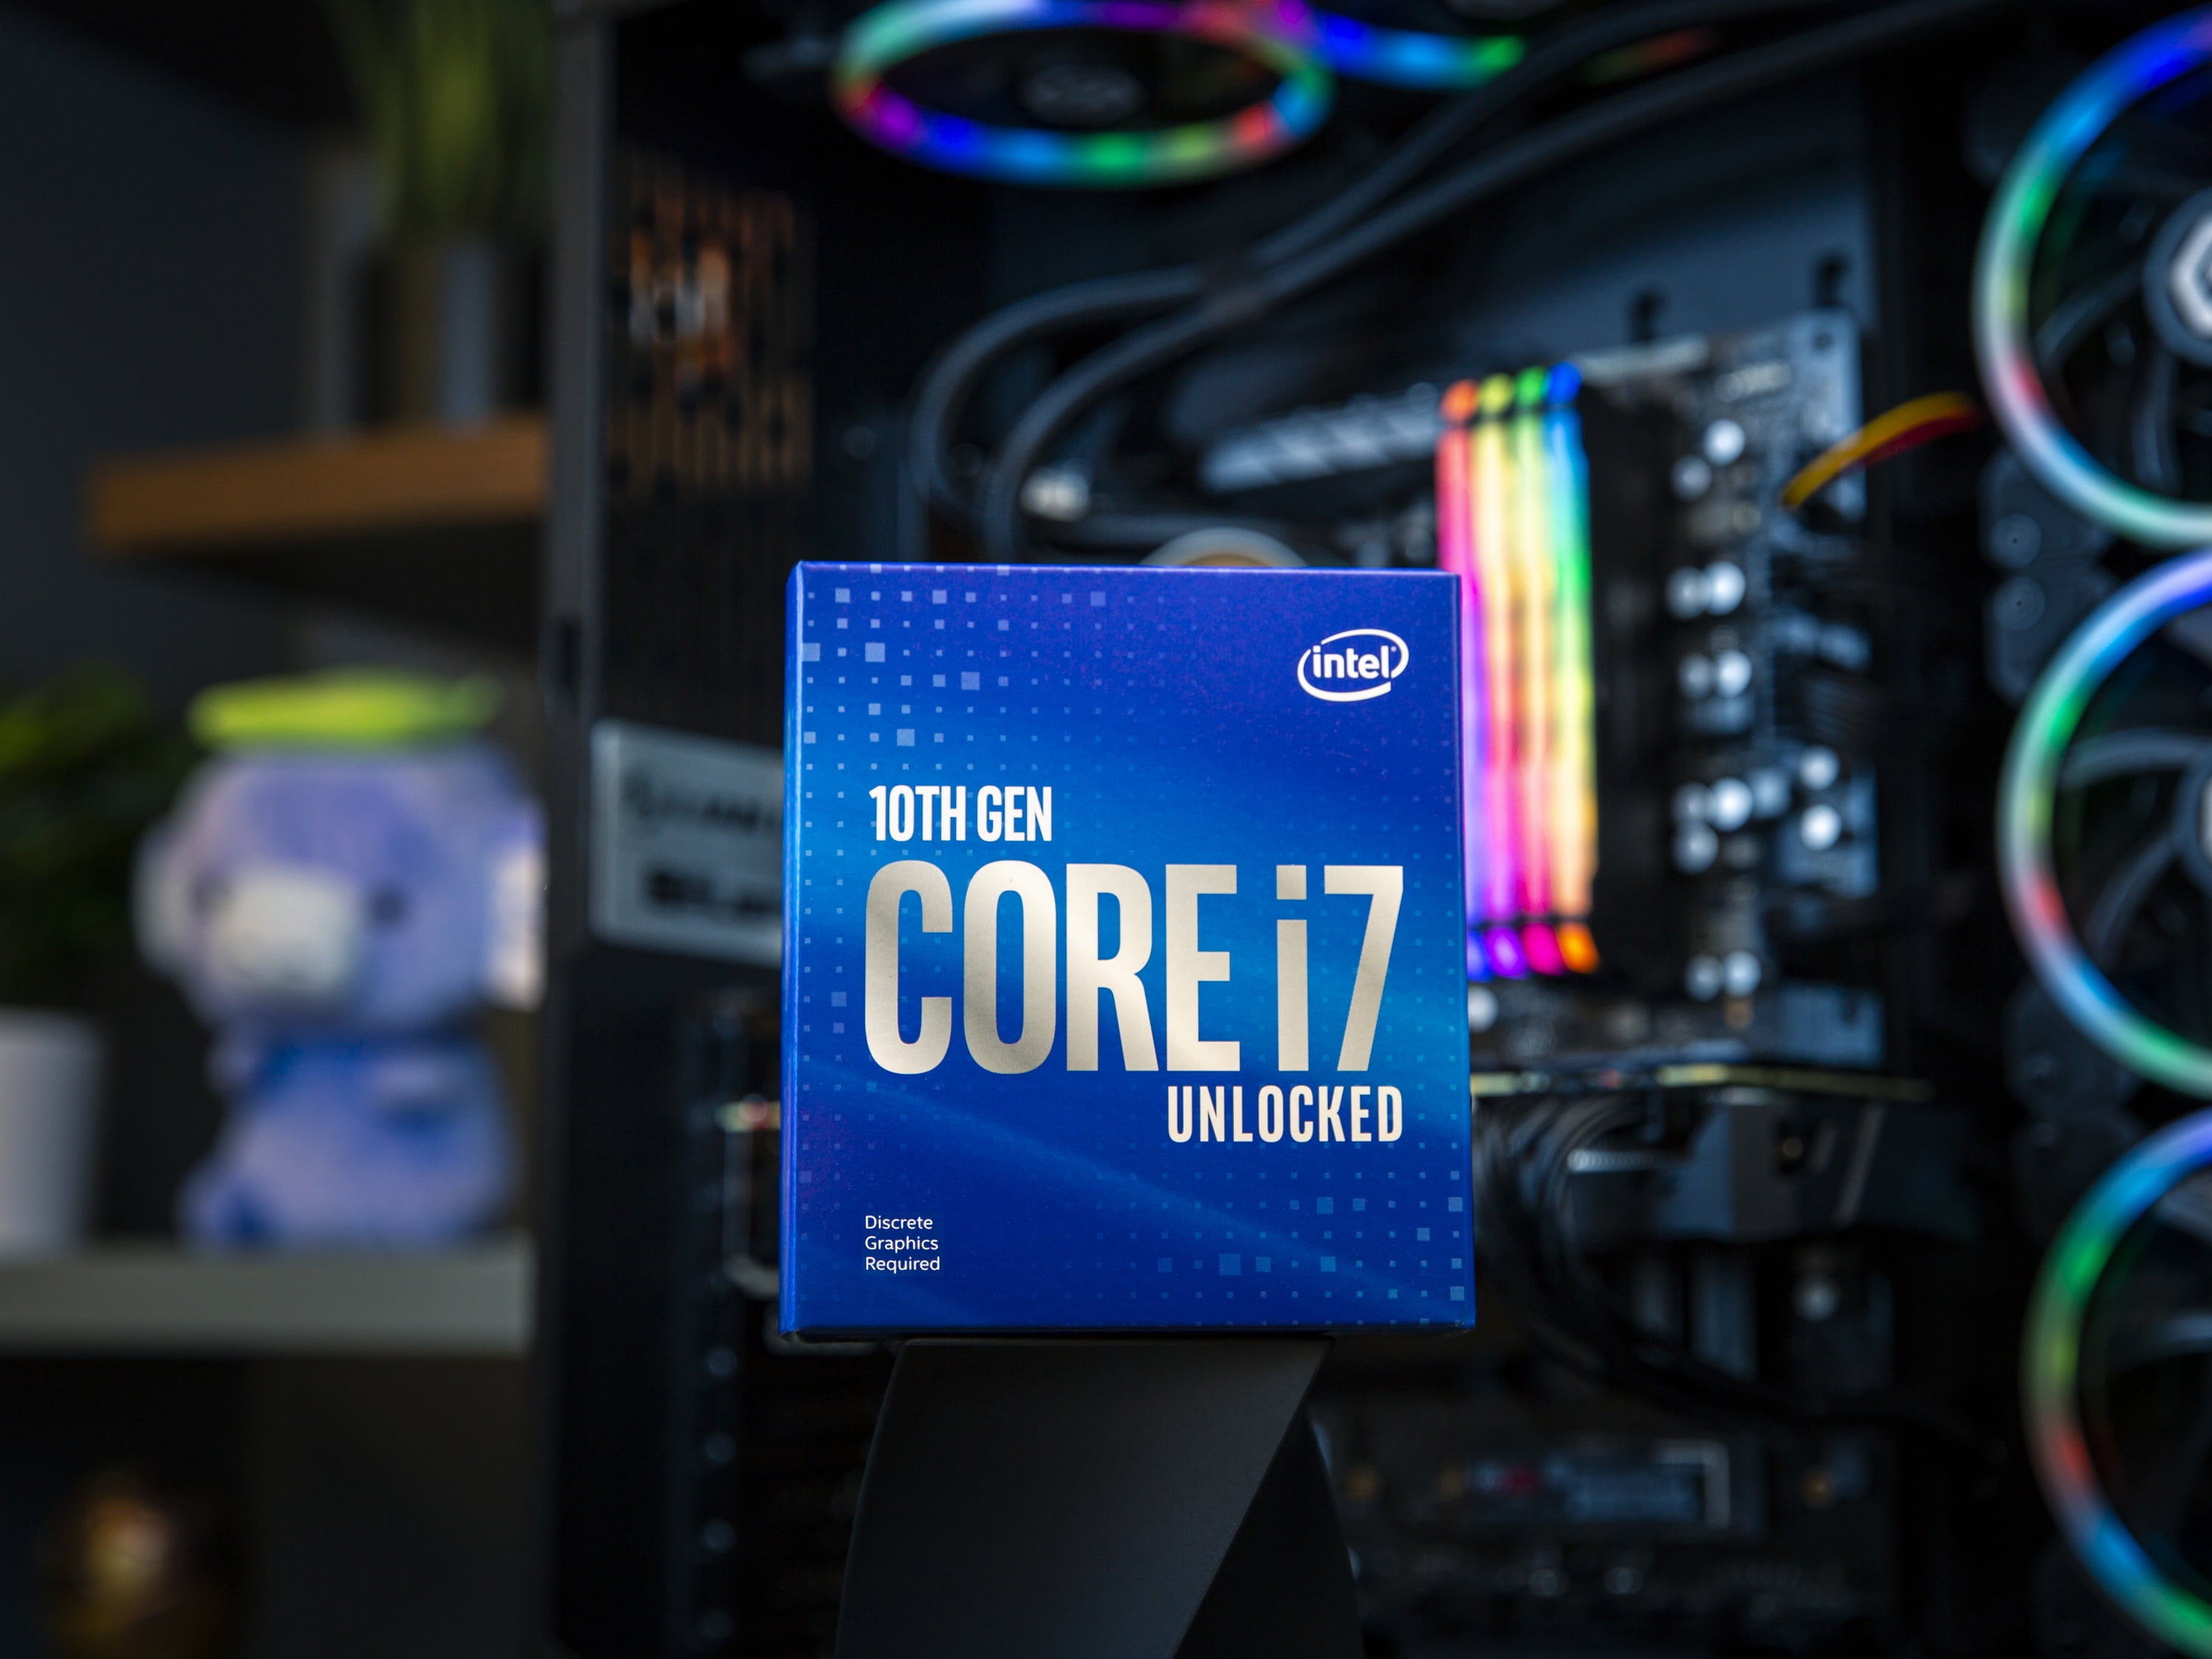 Intel I7-10700k Desktop Processor 8 Cores Up To 5.1 Ghz Unlocked 